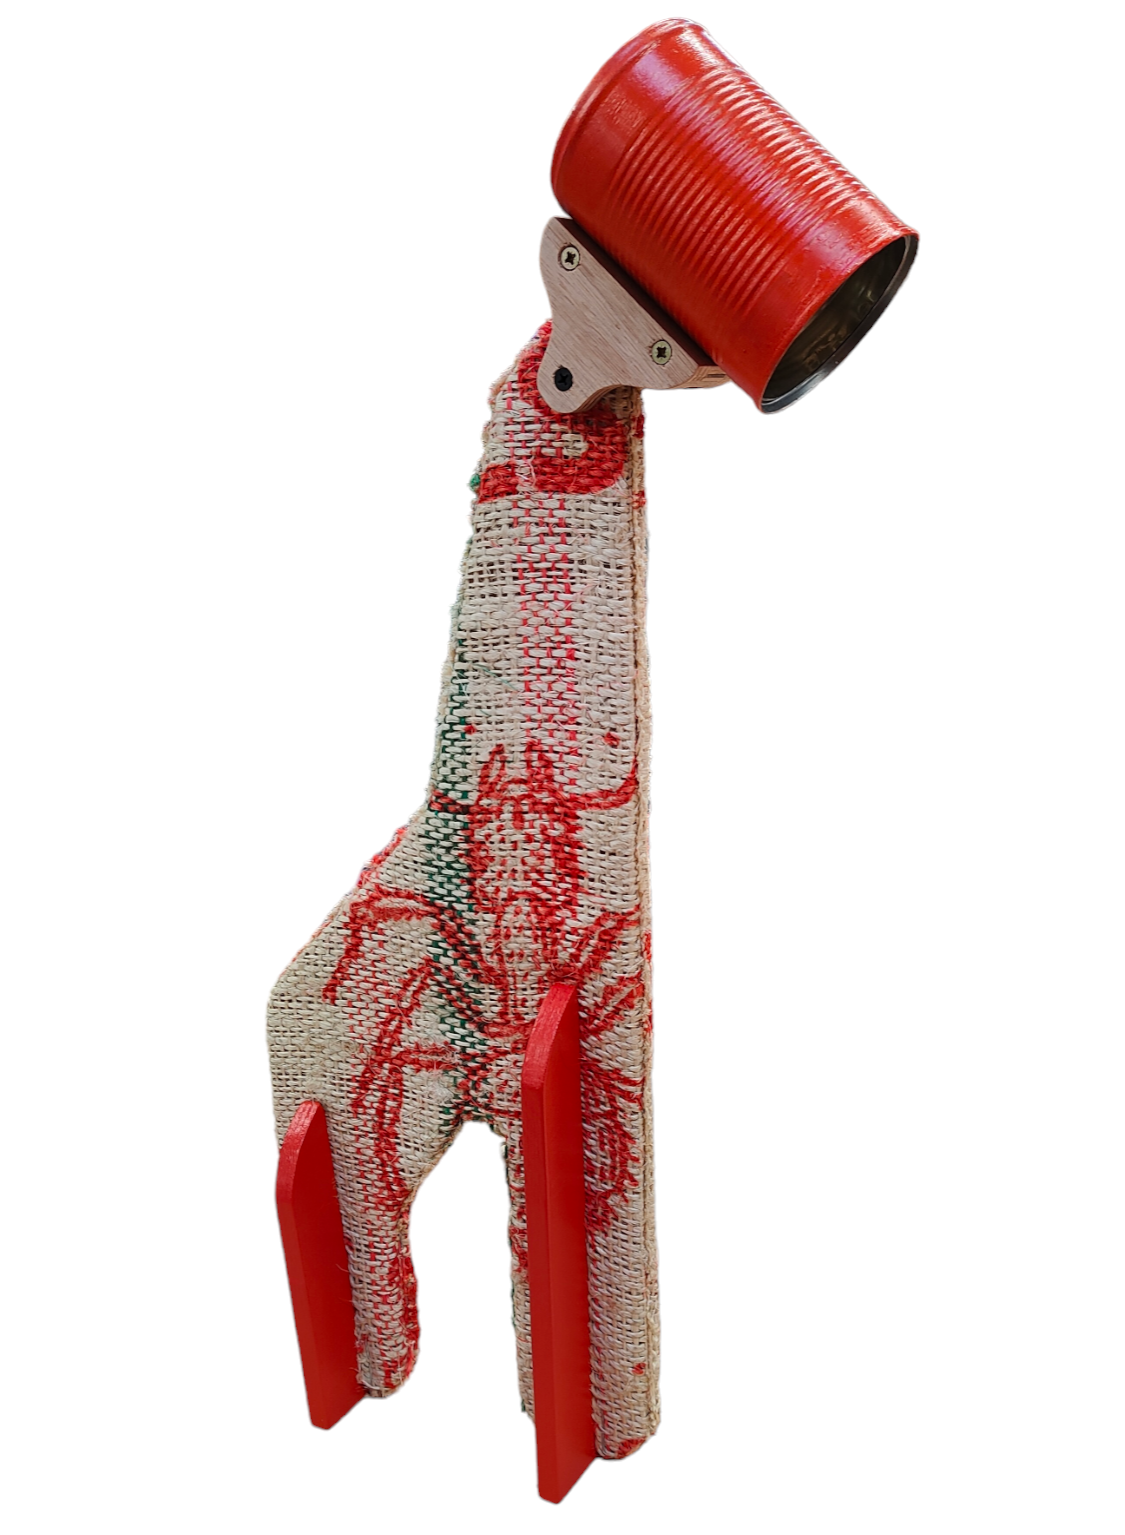 RE: Small Giraffe Lamp (Fabric)